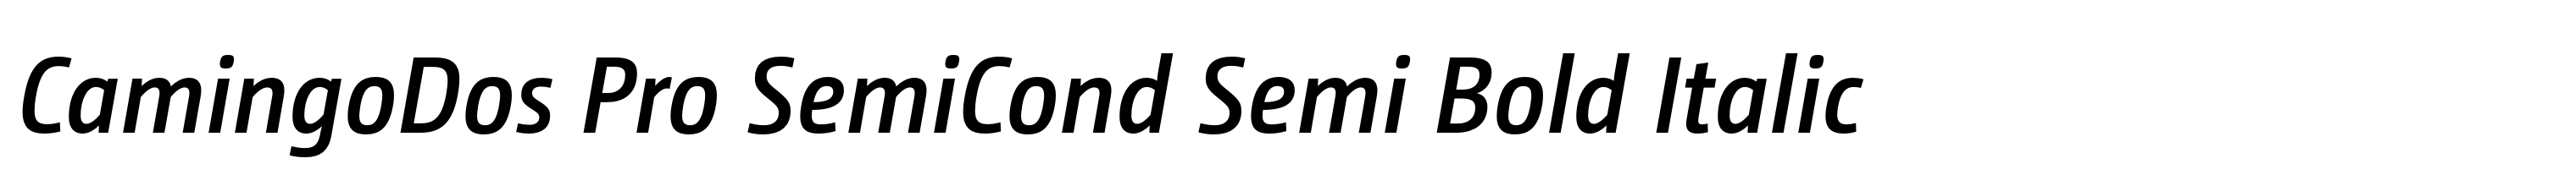 CamingoDos Pro SemiCond Semi Bold Italic